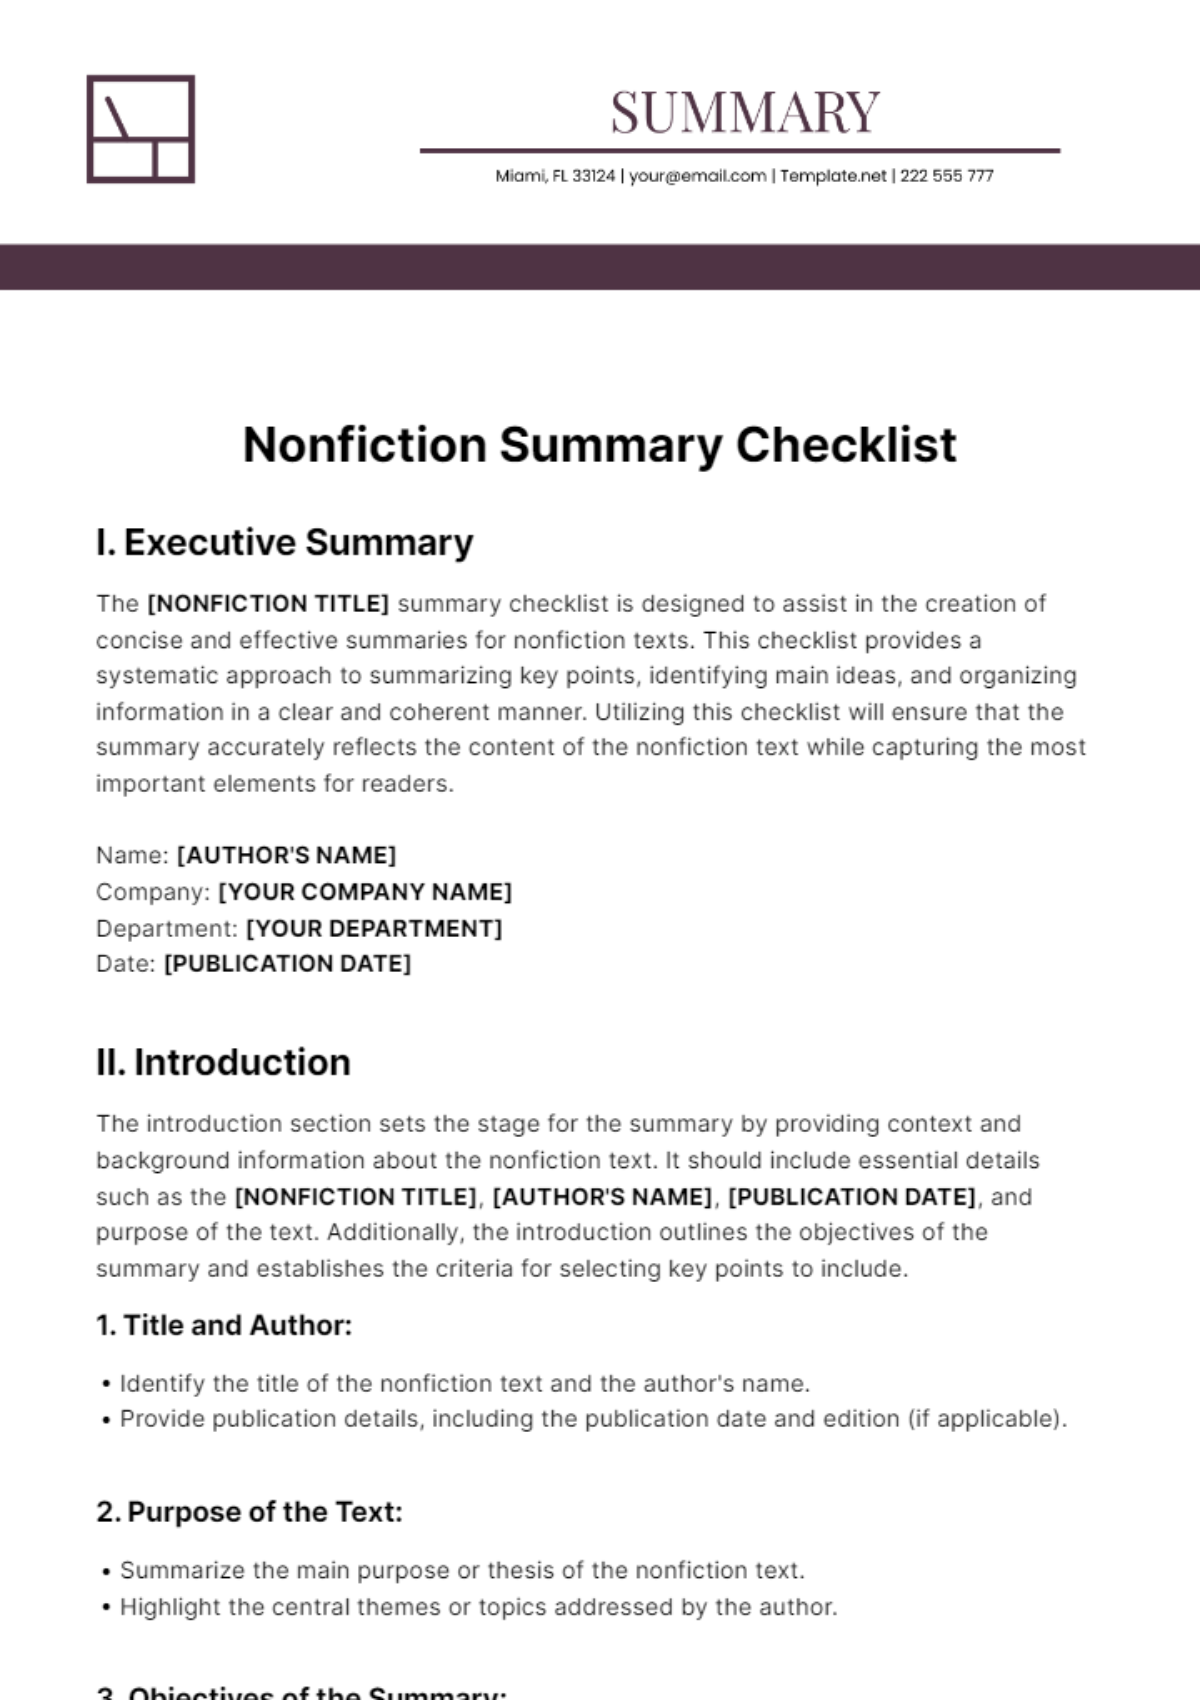 Free Nonfiction Summary Checklist Template